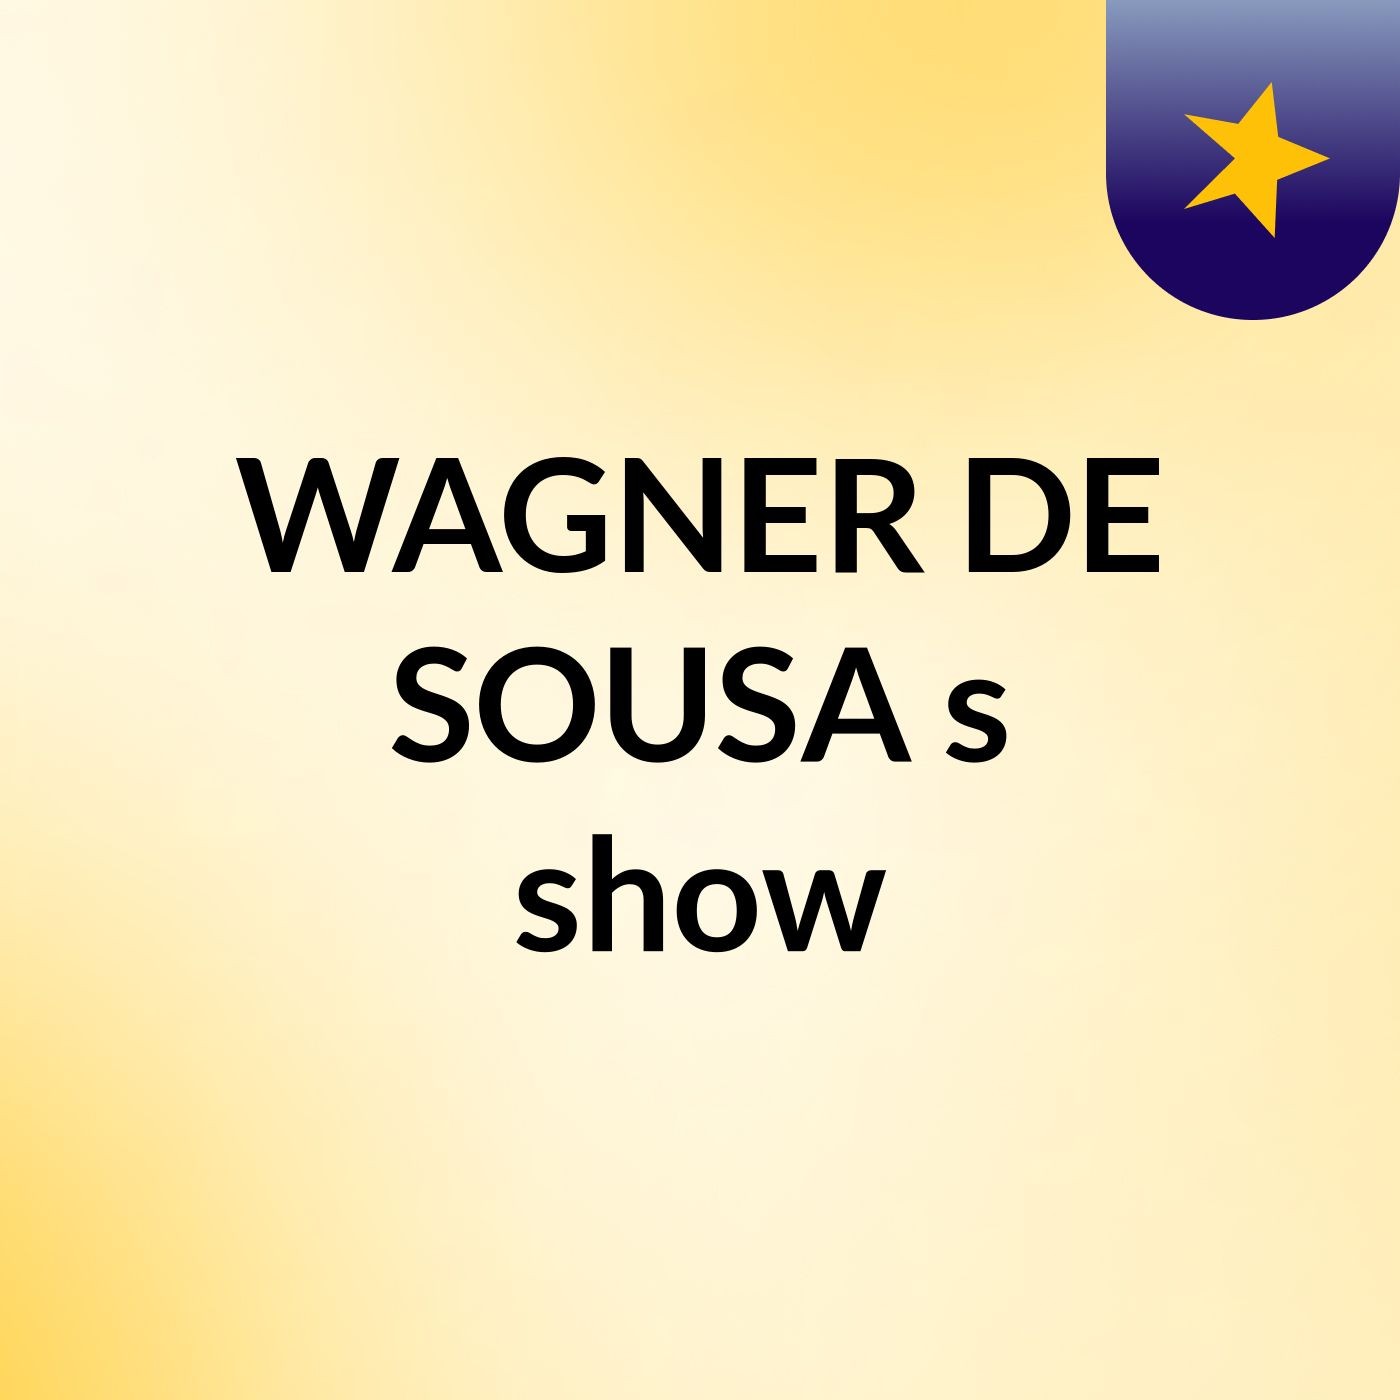 WAGNER DE SOUSA's show